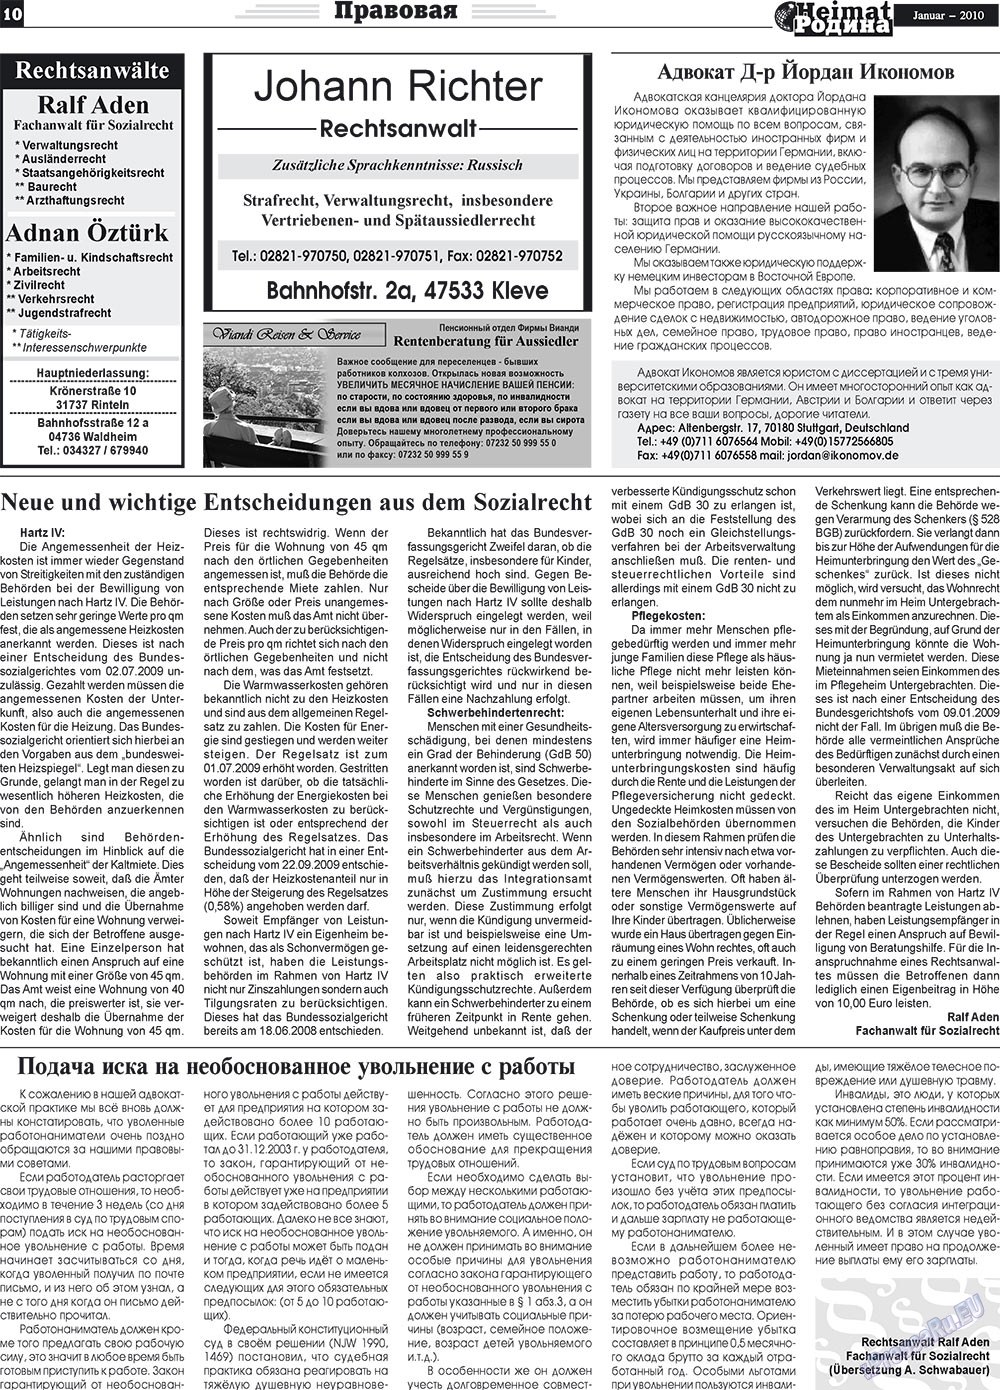 Heimat-Родина, газета. 2010 №1 стр.10